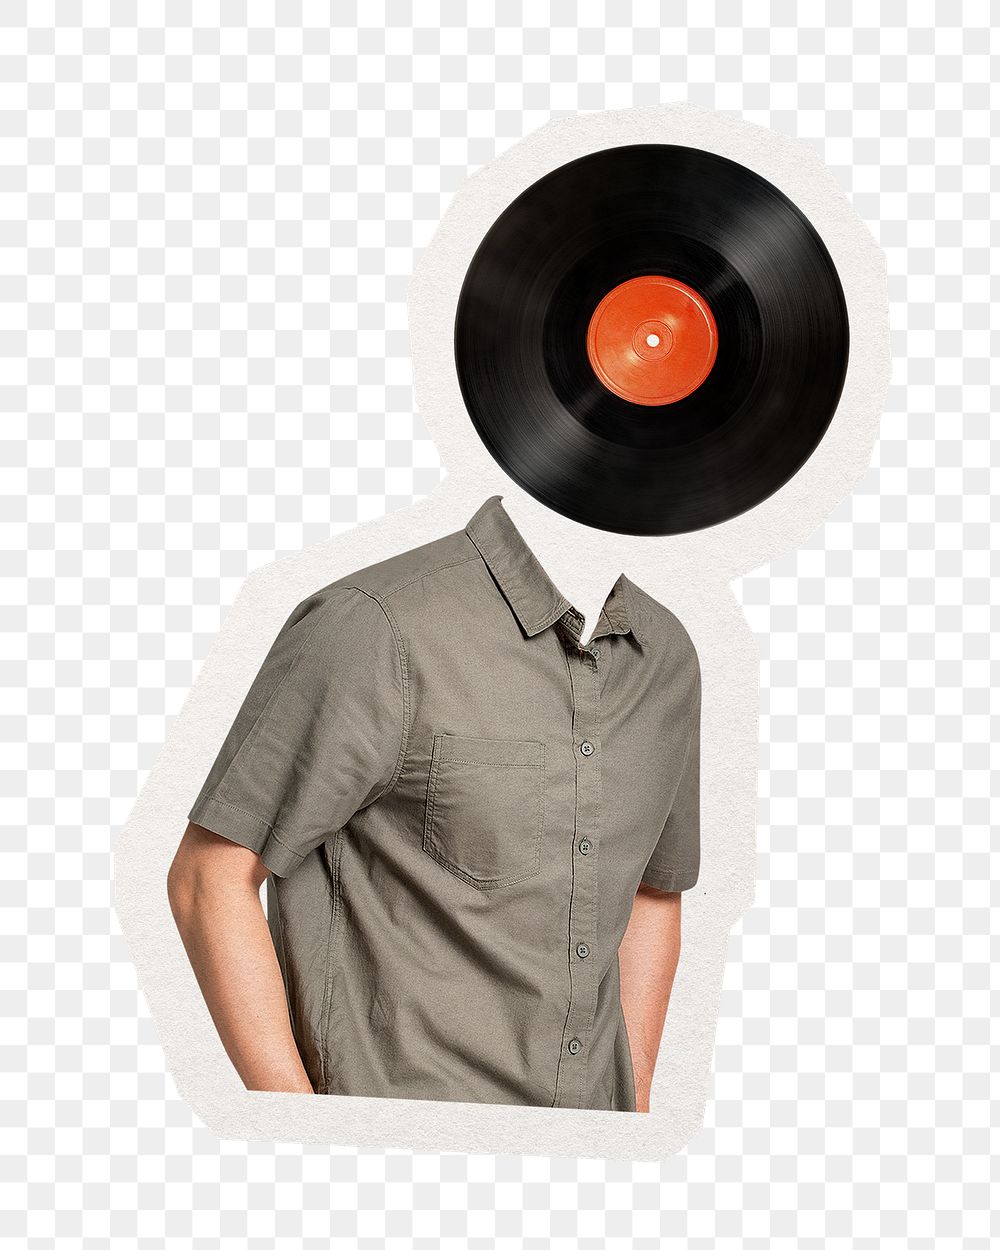 Vinyl head png man sticker, surreal music remixed media, transparent background